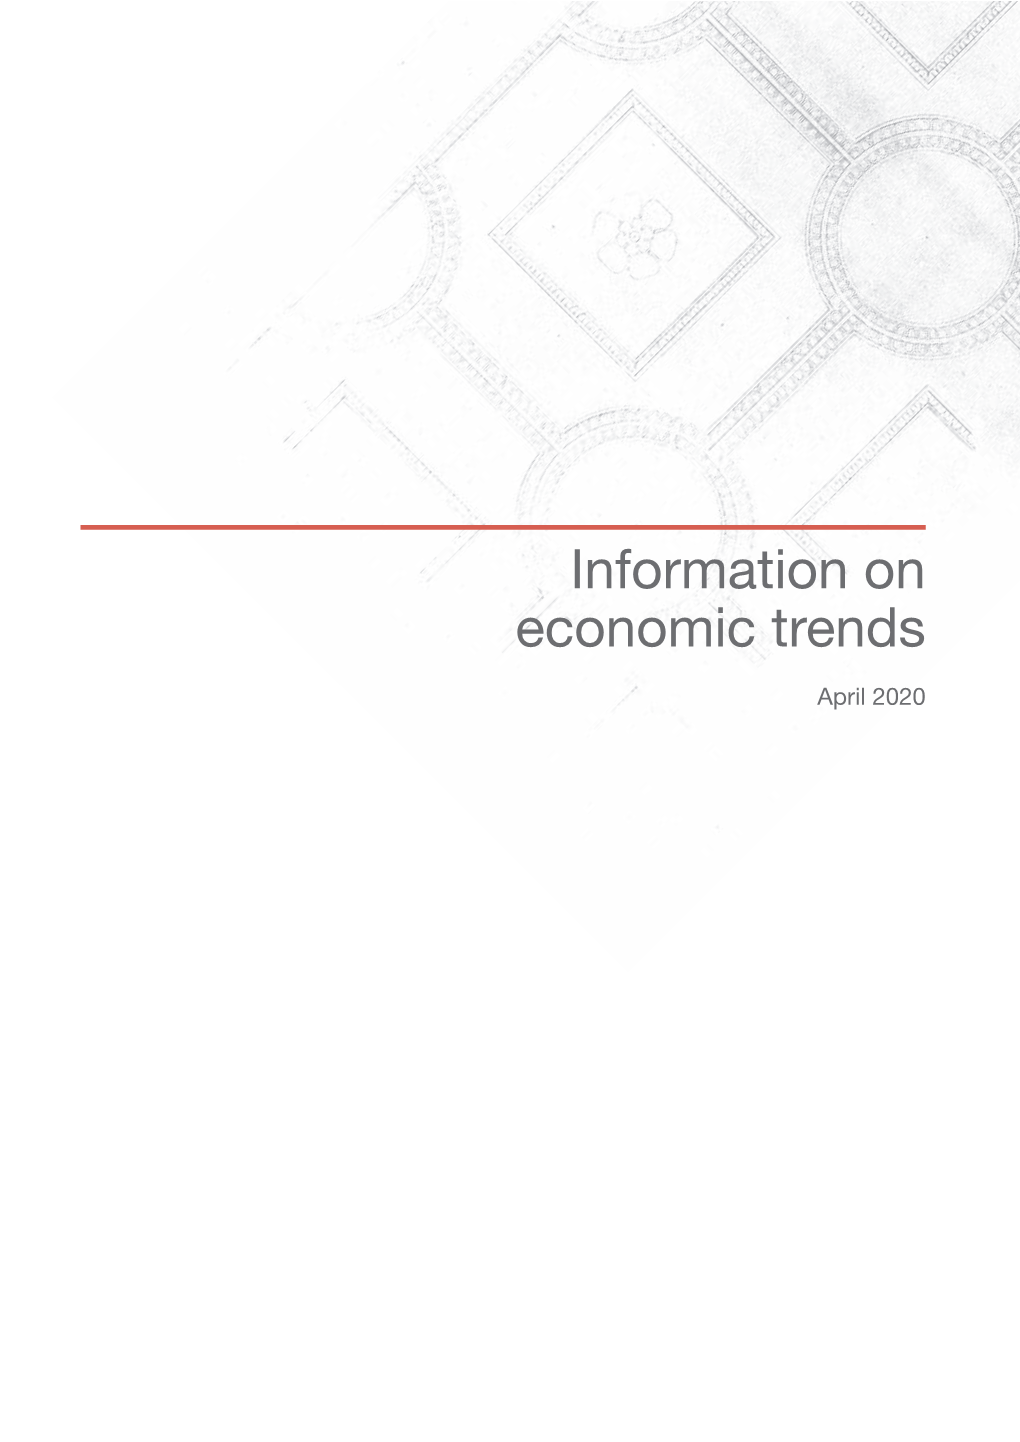 Information on Economic Trends, April 2020